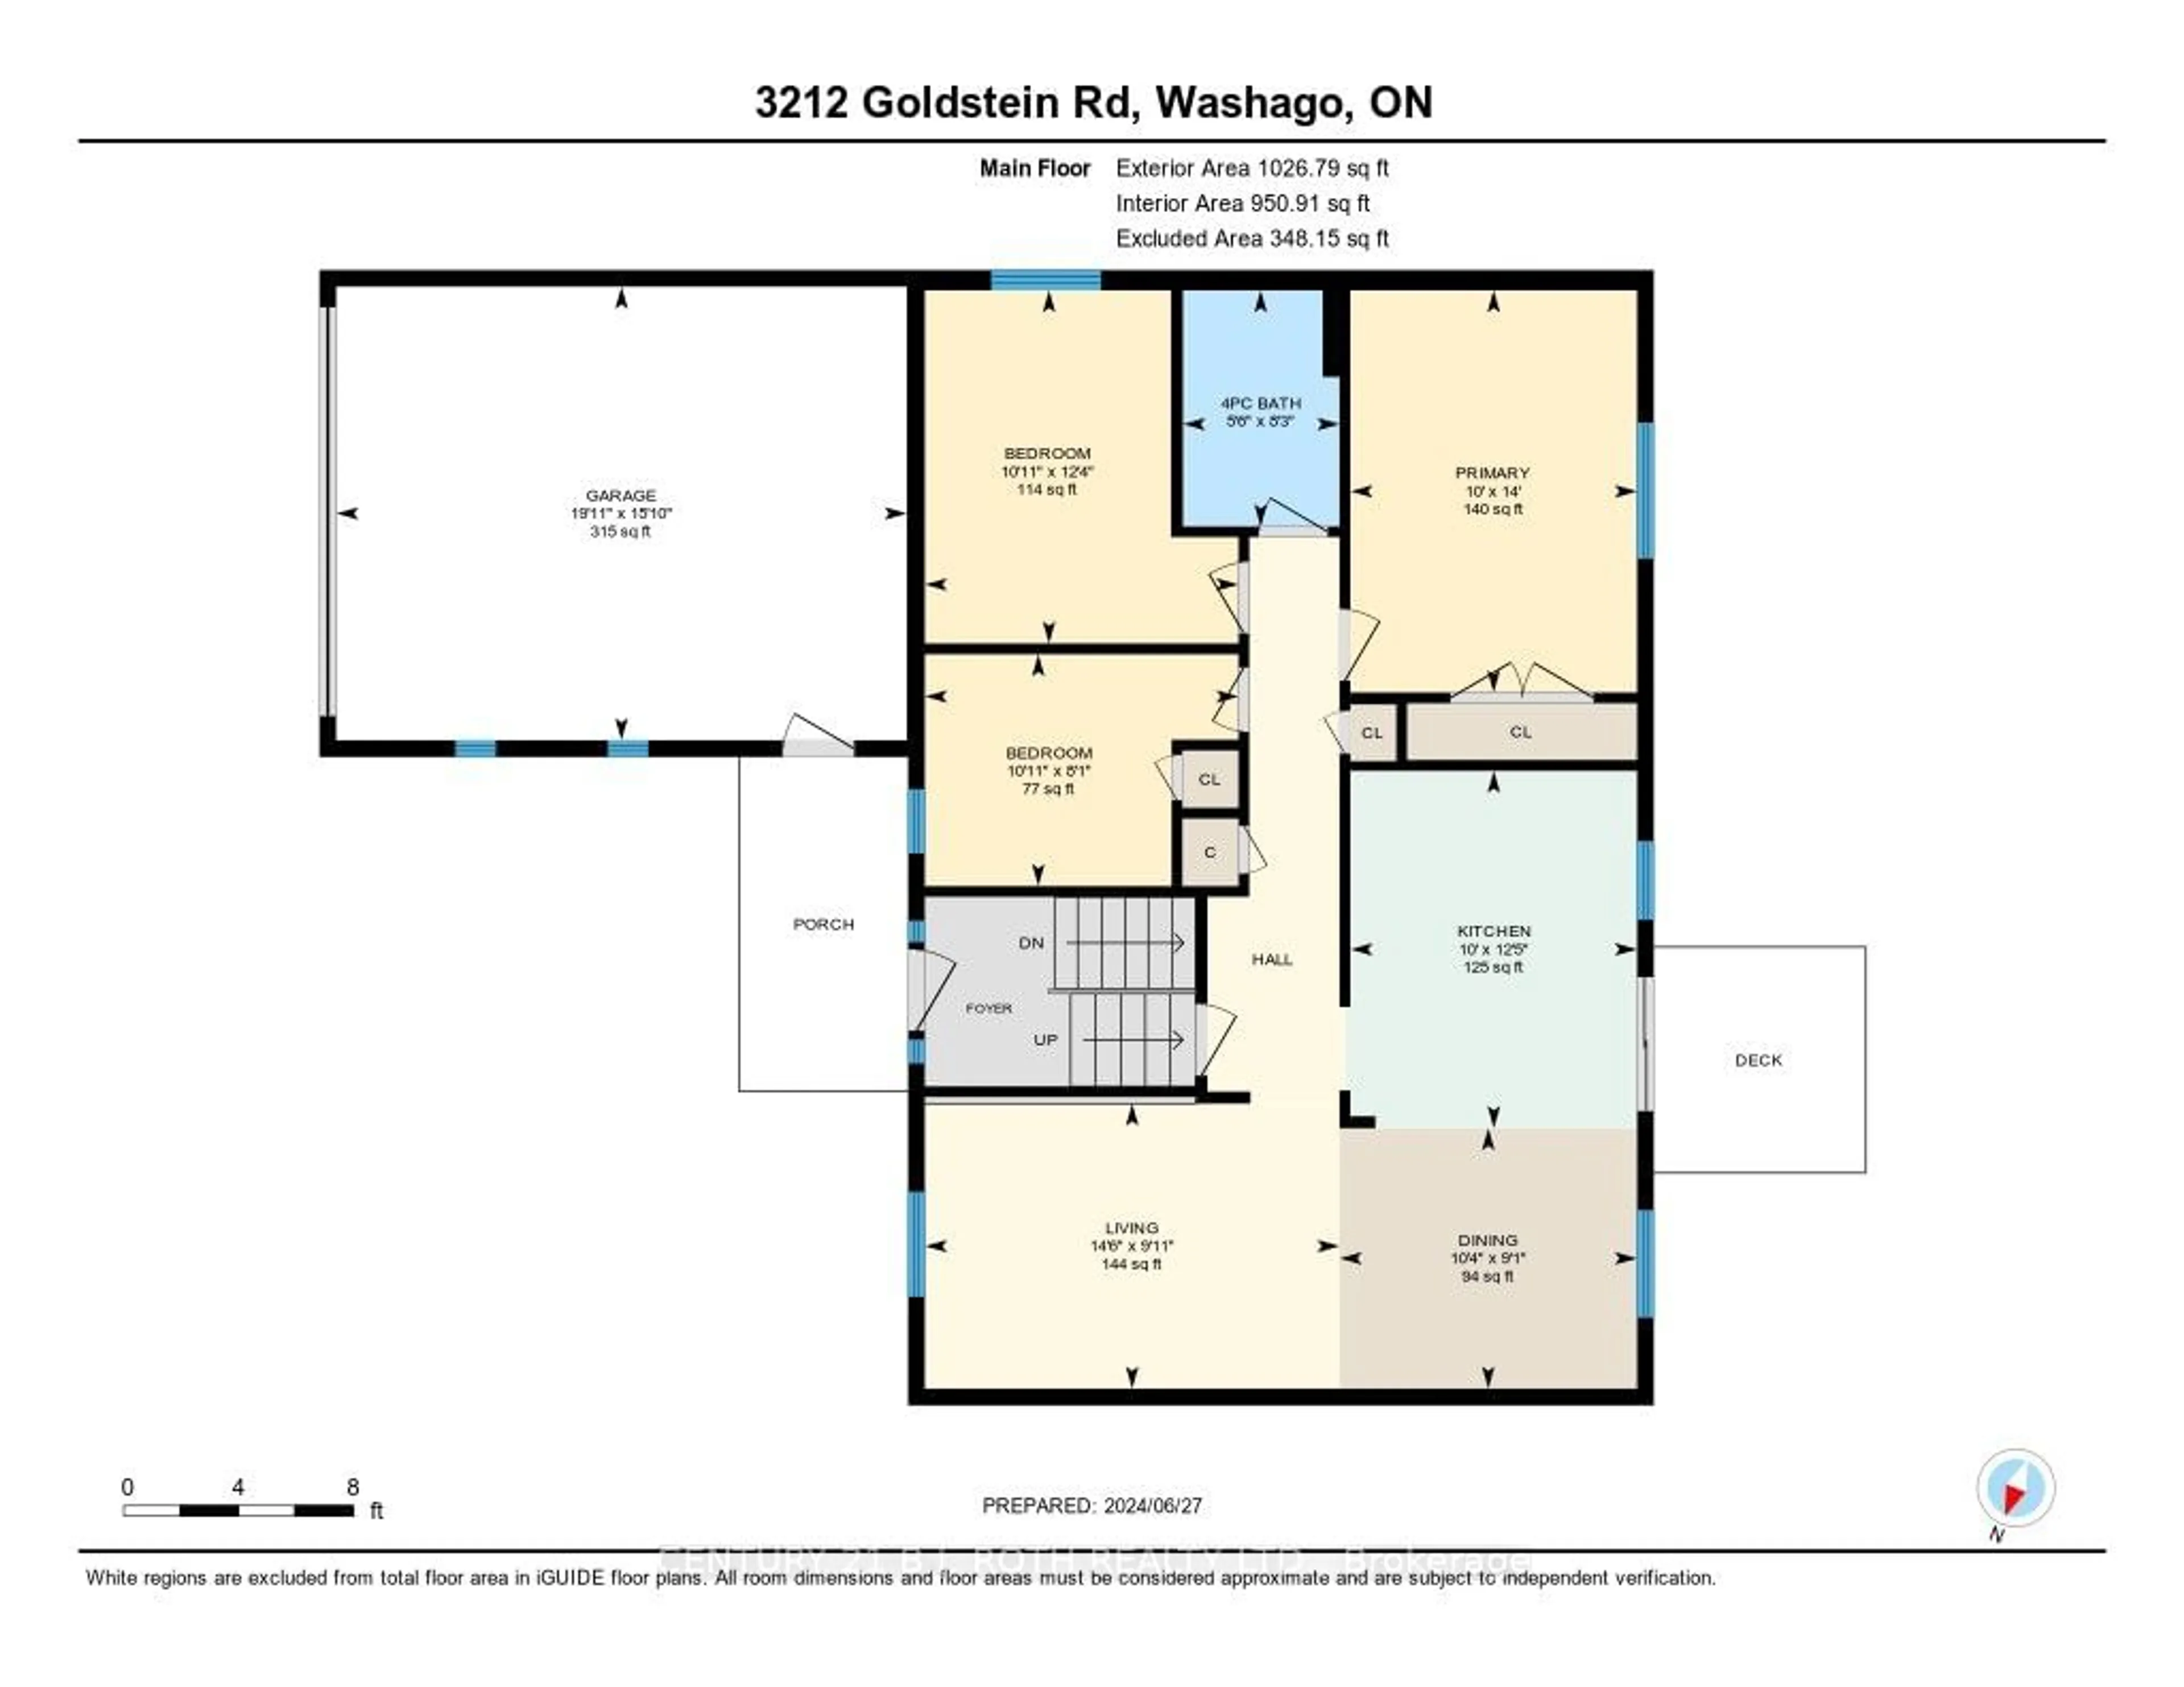 Floor plan for 3212 Goldstein Rd, Severn Ontario L0K 2B0